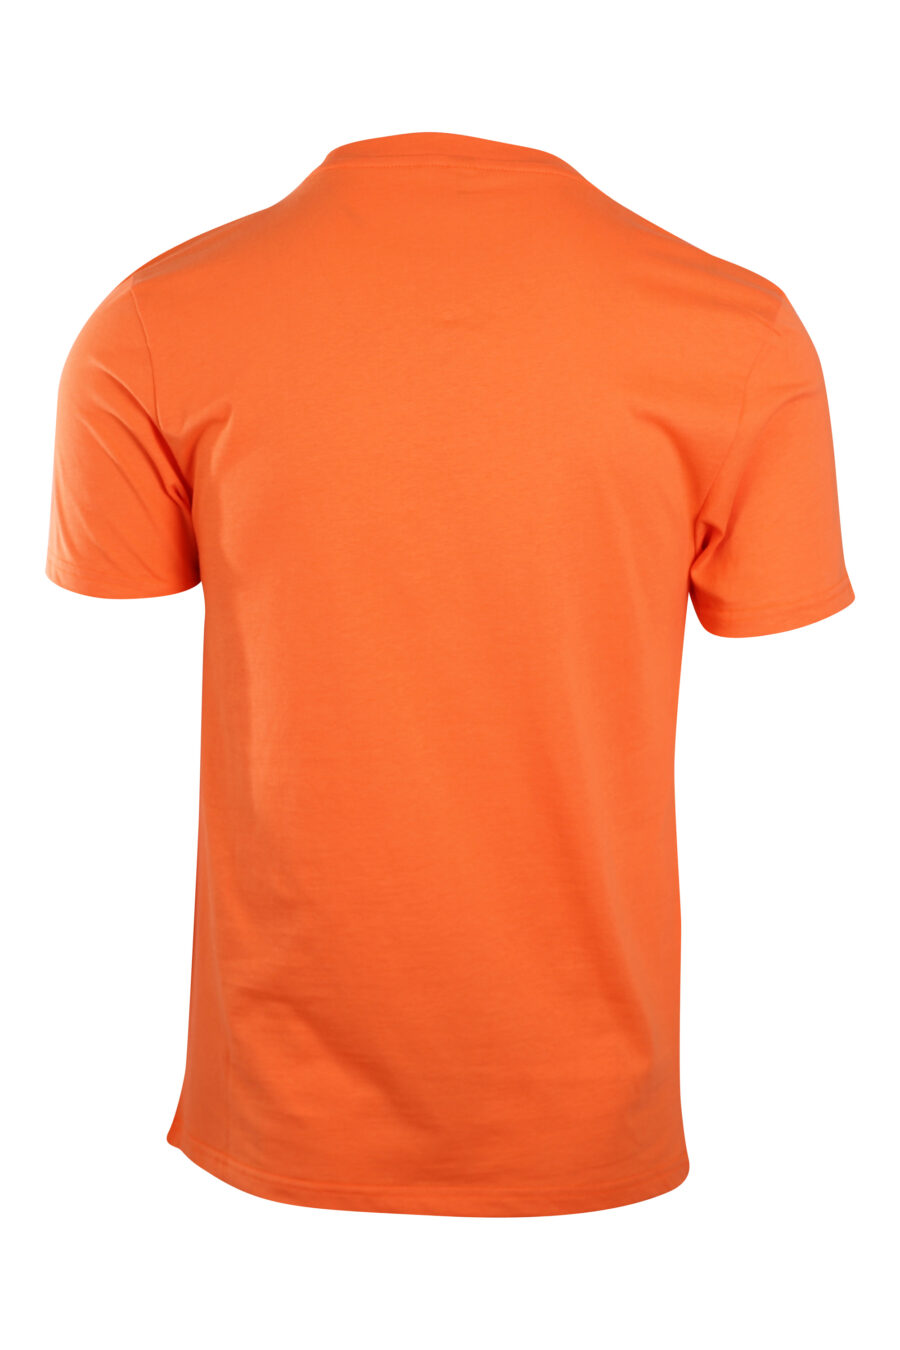 T-shirt cor de laranja com logótipo nos ombros - IMG 2198